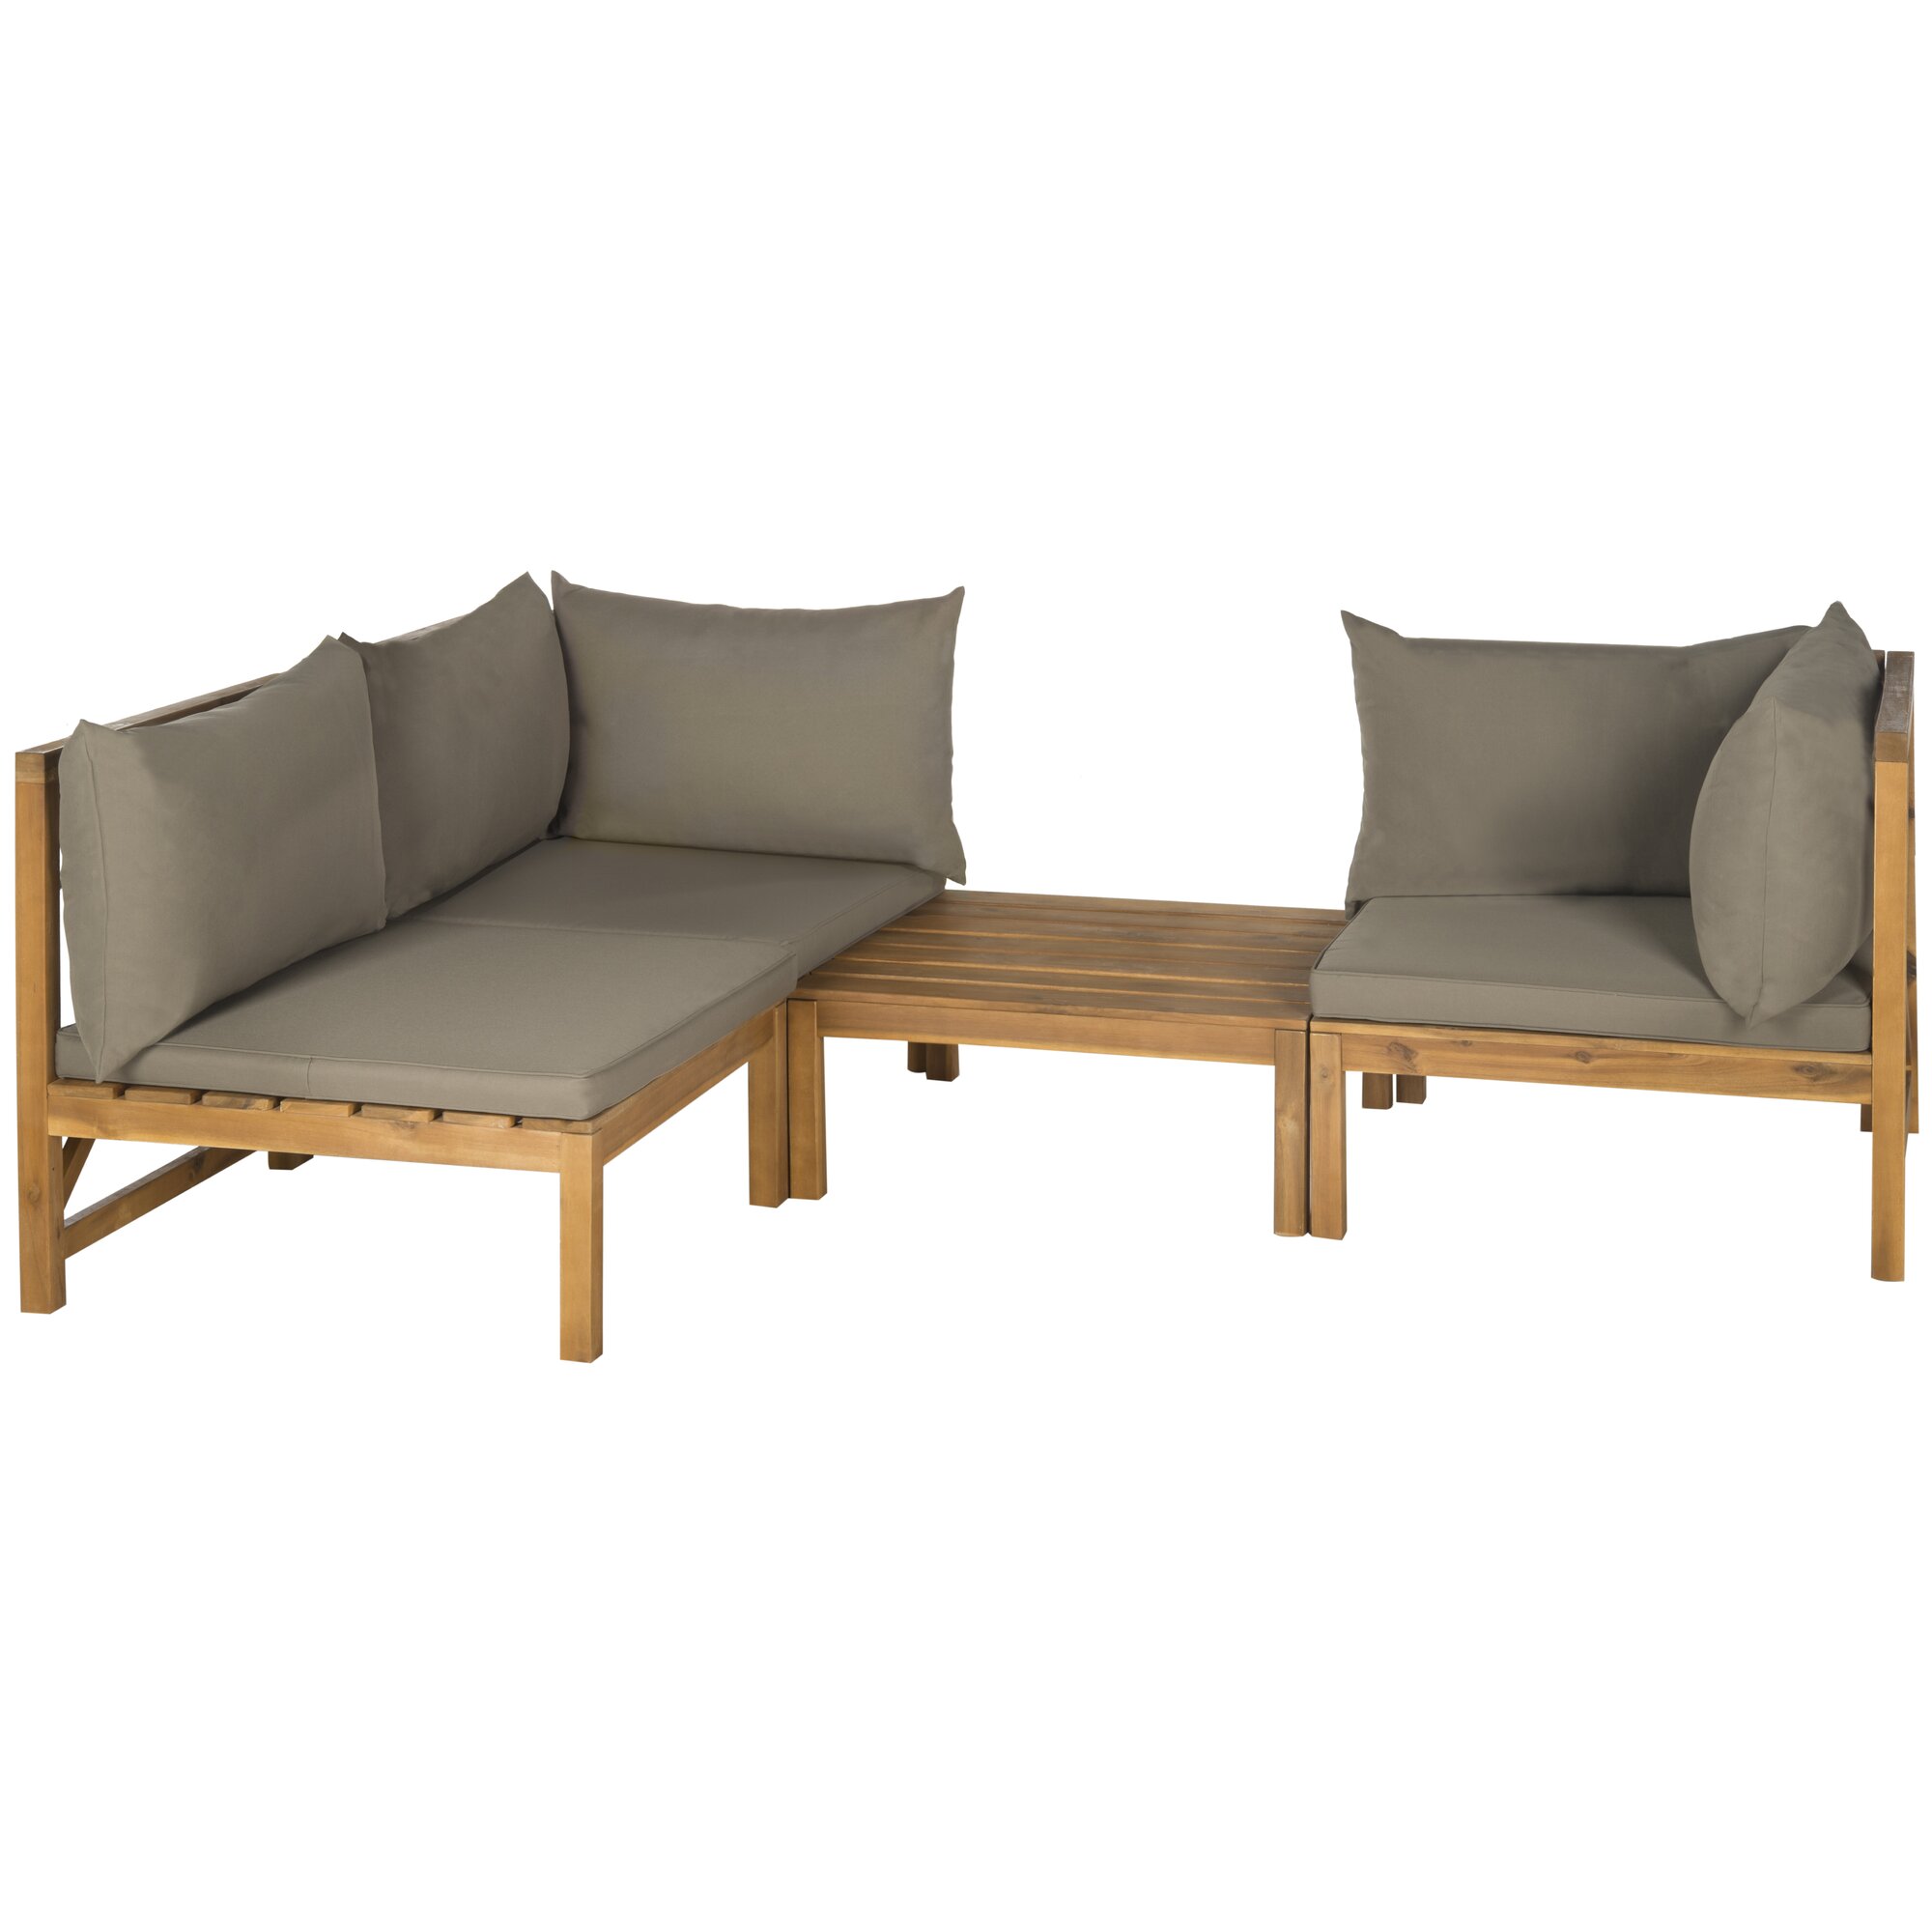 Sanibel Lynwood Modular Outdoor 4 Piece Seating Group With Cushion 